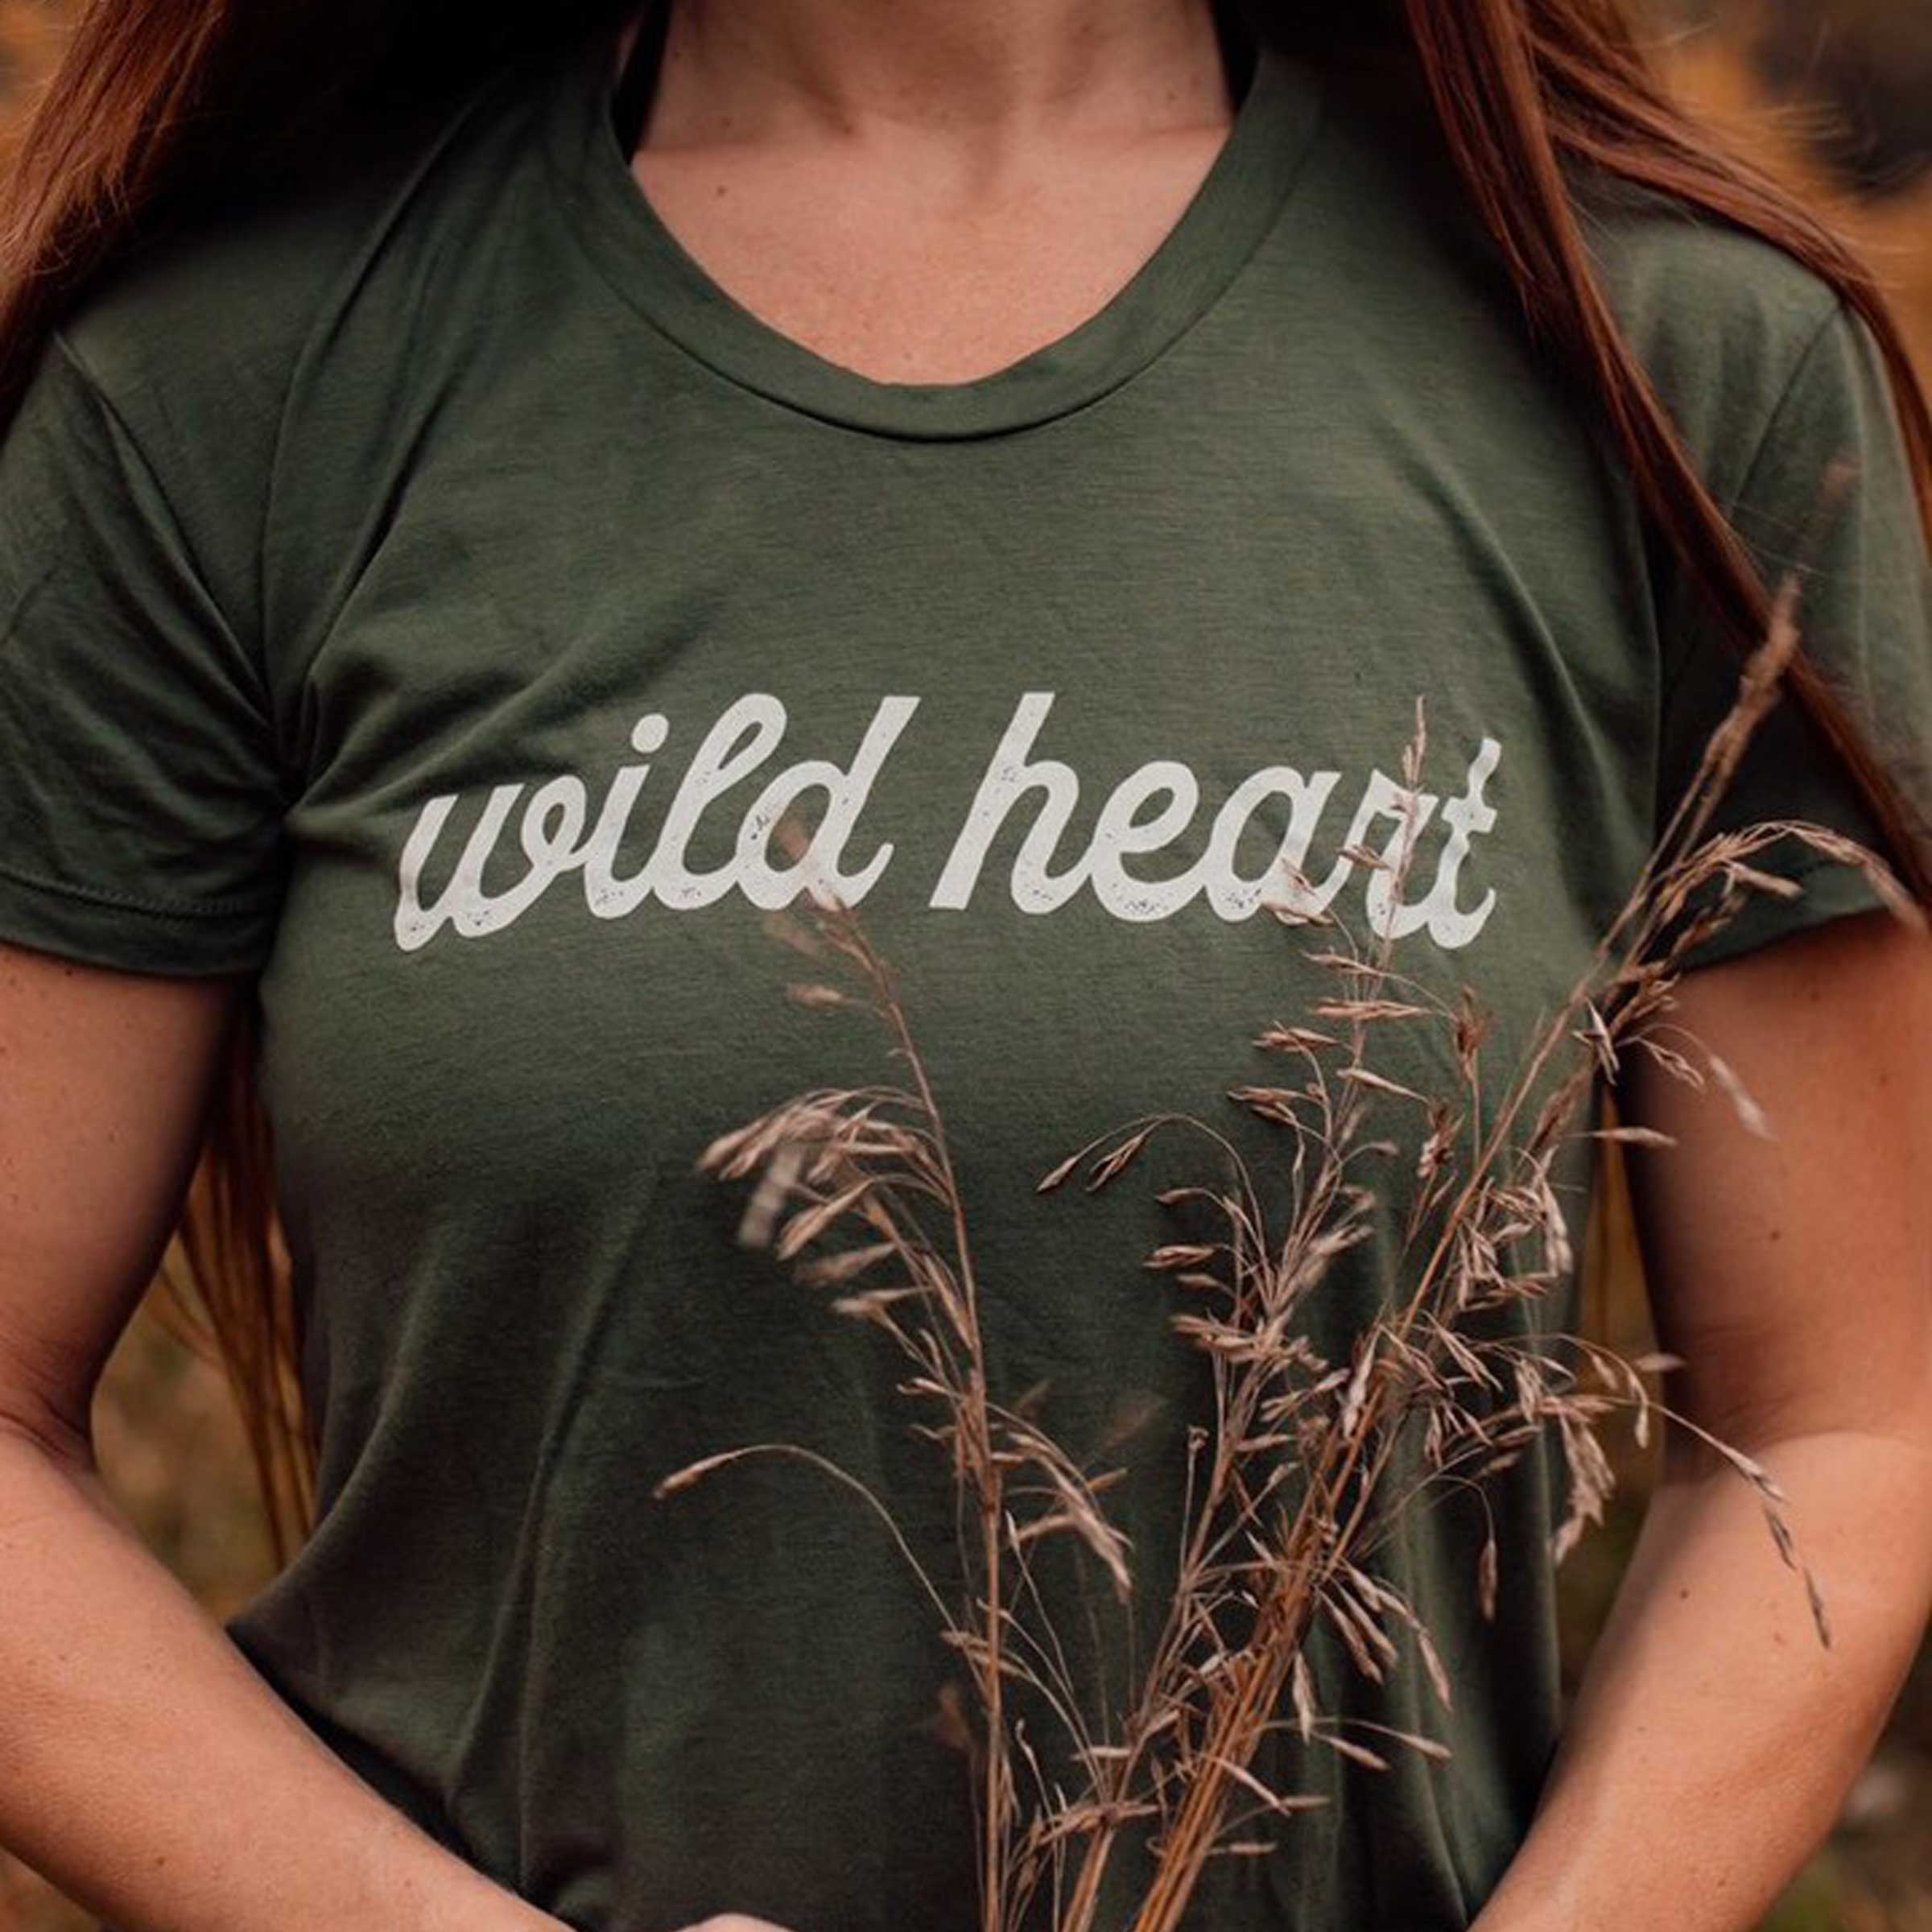 Wild women's apparel